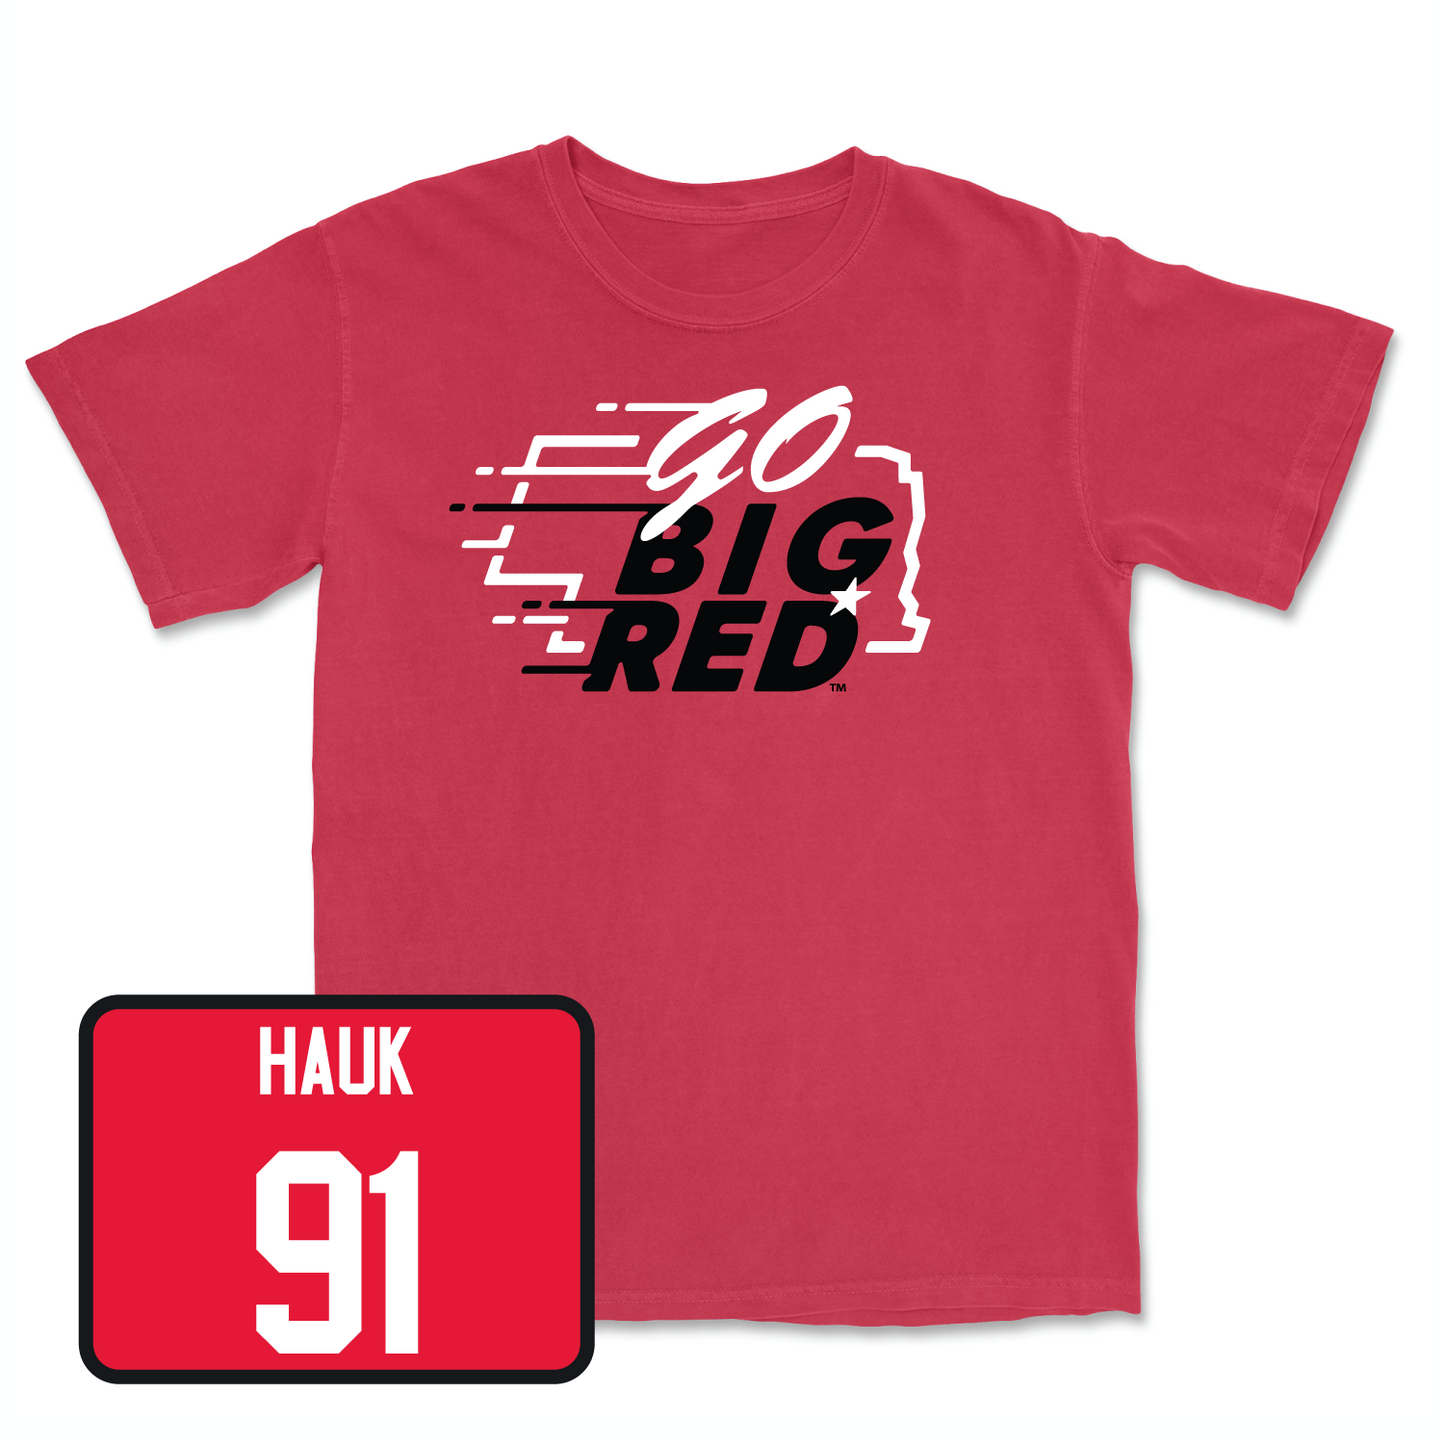 Red Women's Soccer GBR Tee 4X-Large / Sami Hauk | #91